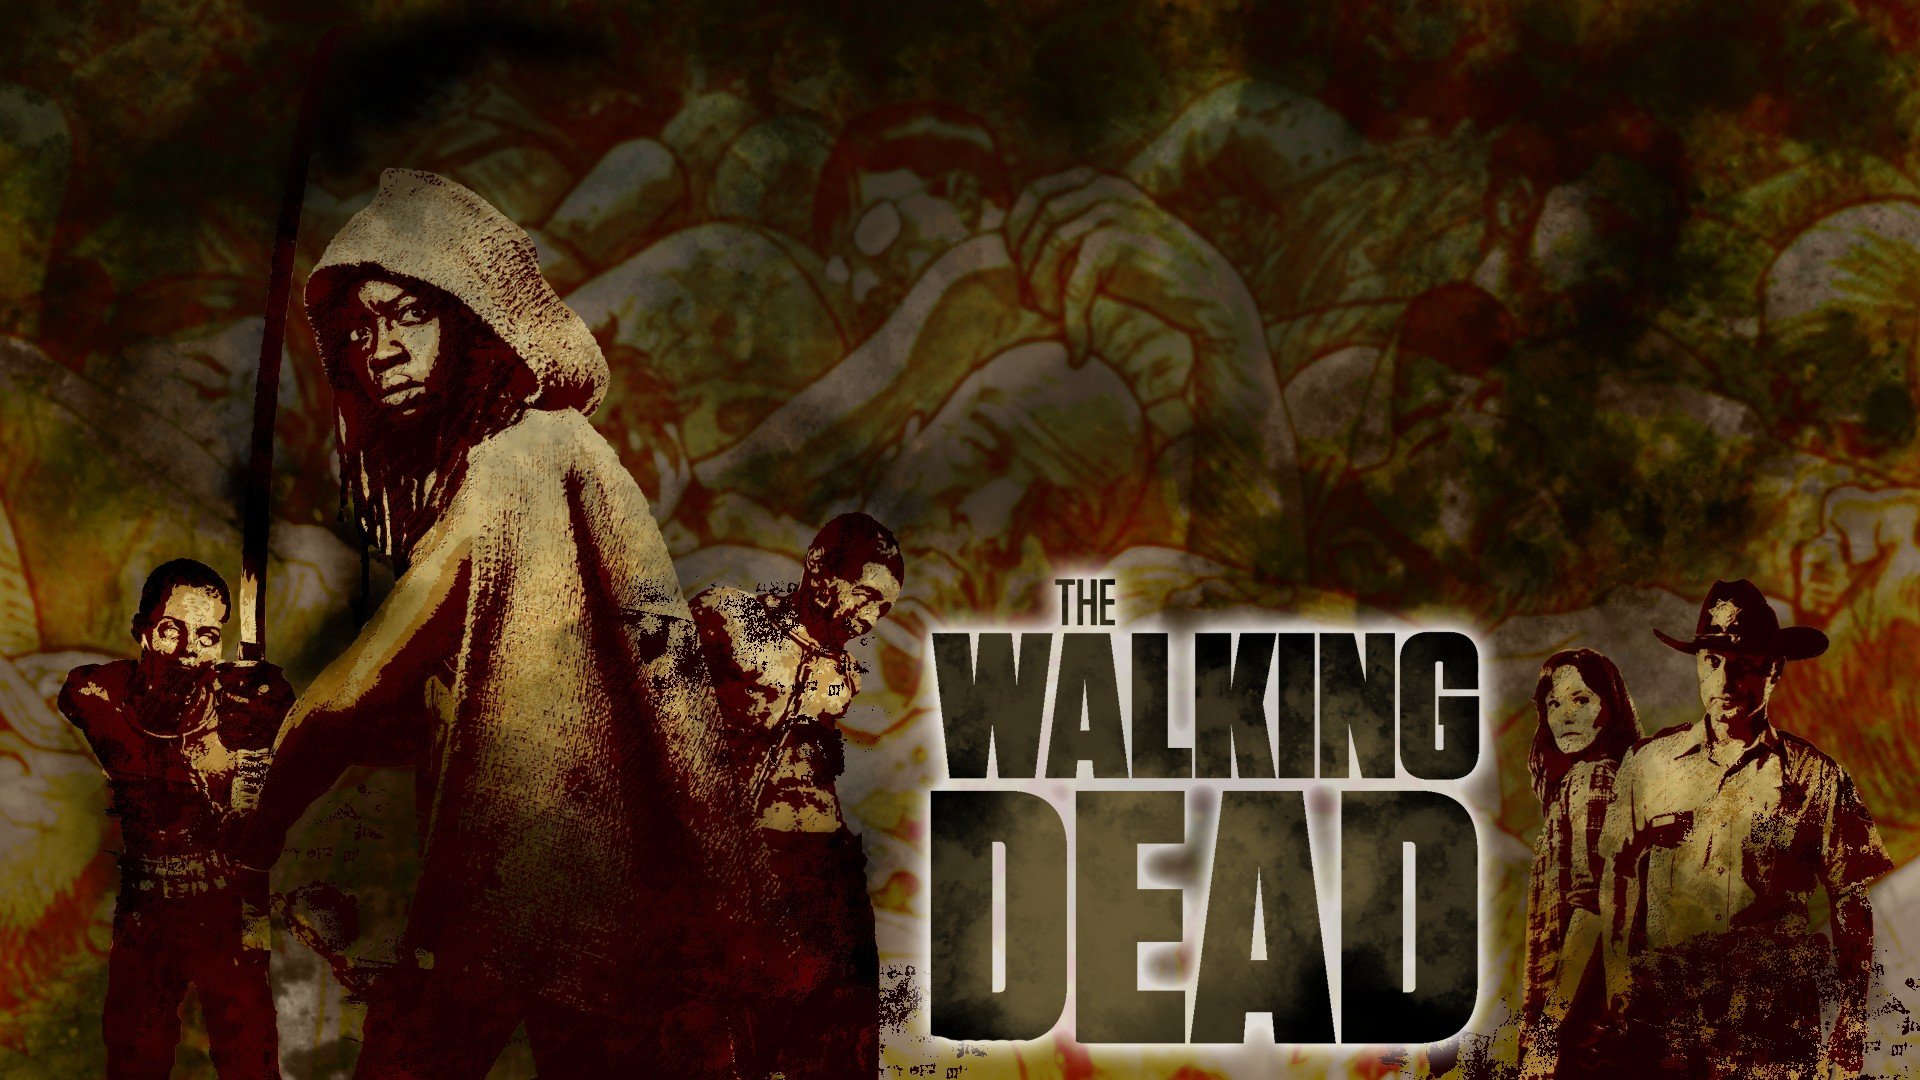 The Walking Dead Wallpaper Full HD ImageBankbiz